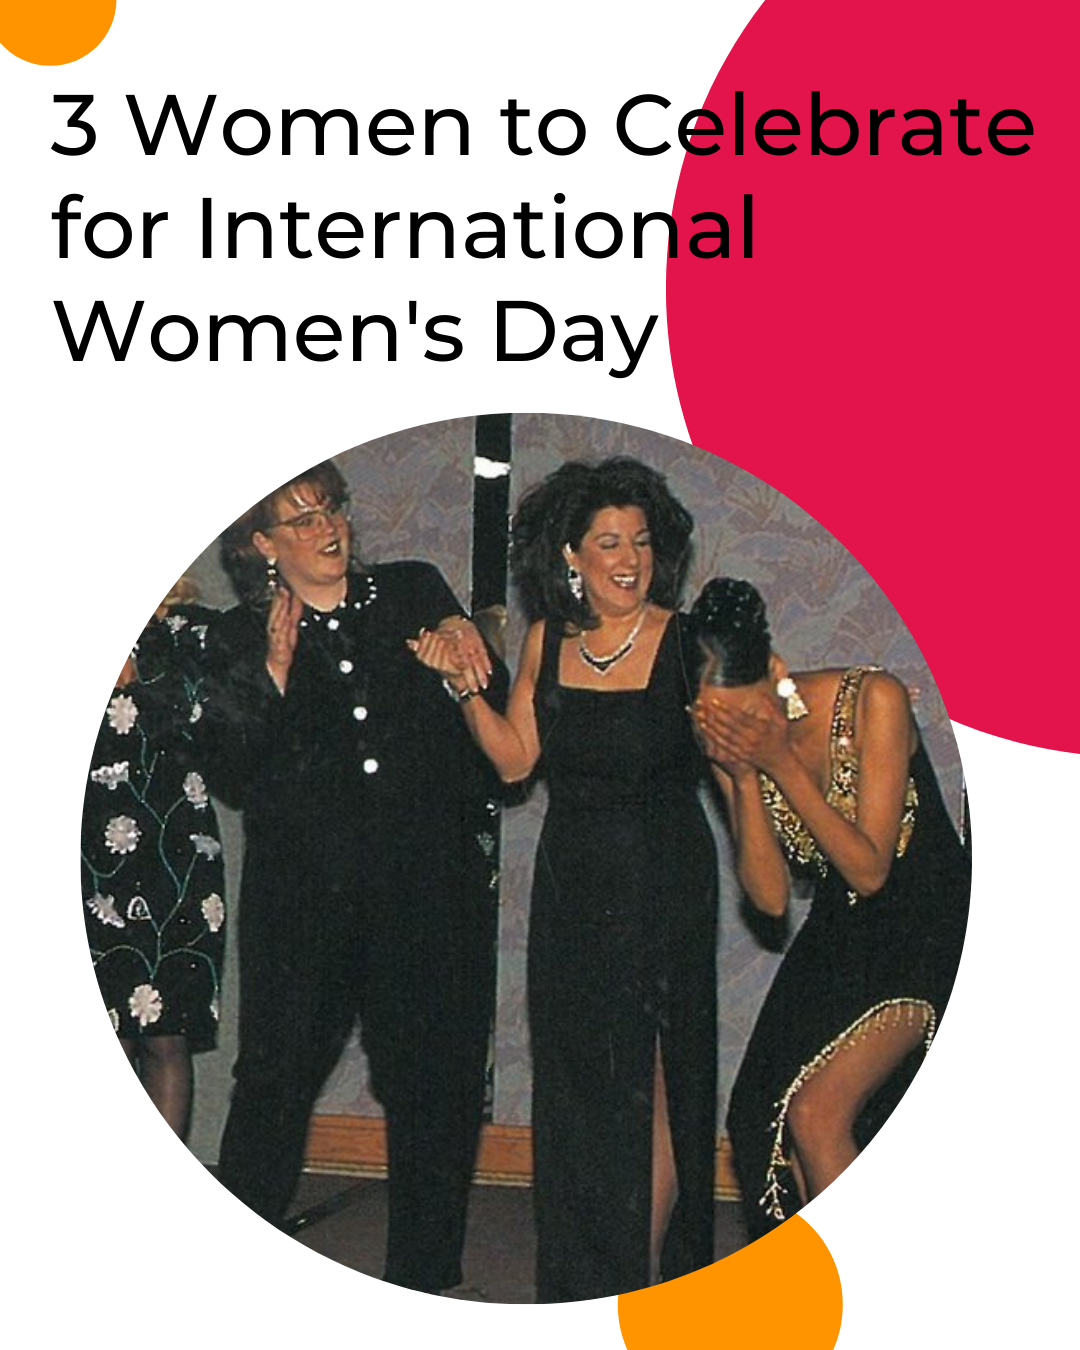 3 Women to Celebrate on International Women's Day